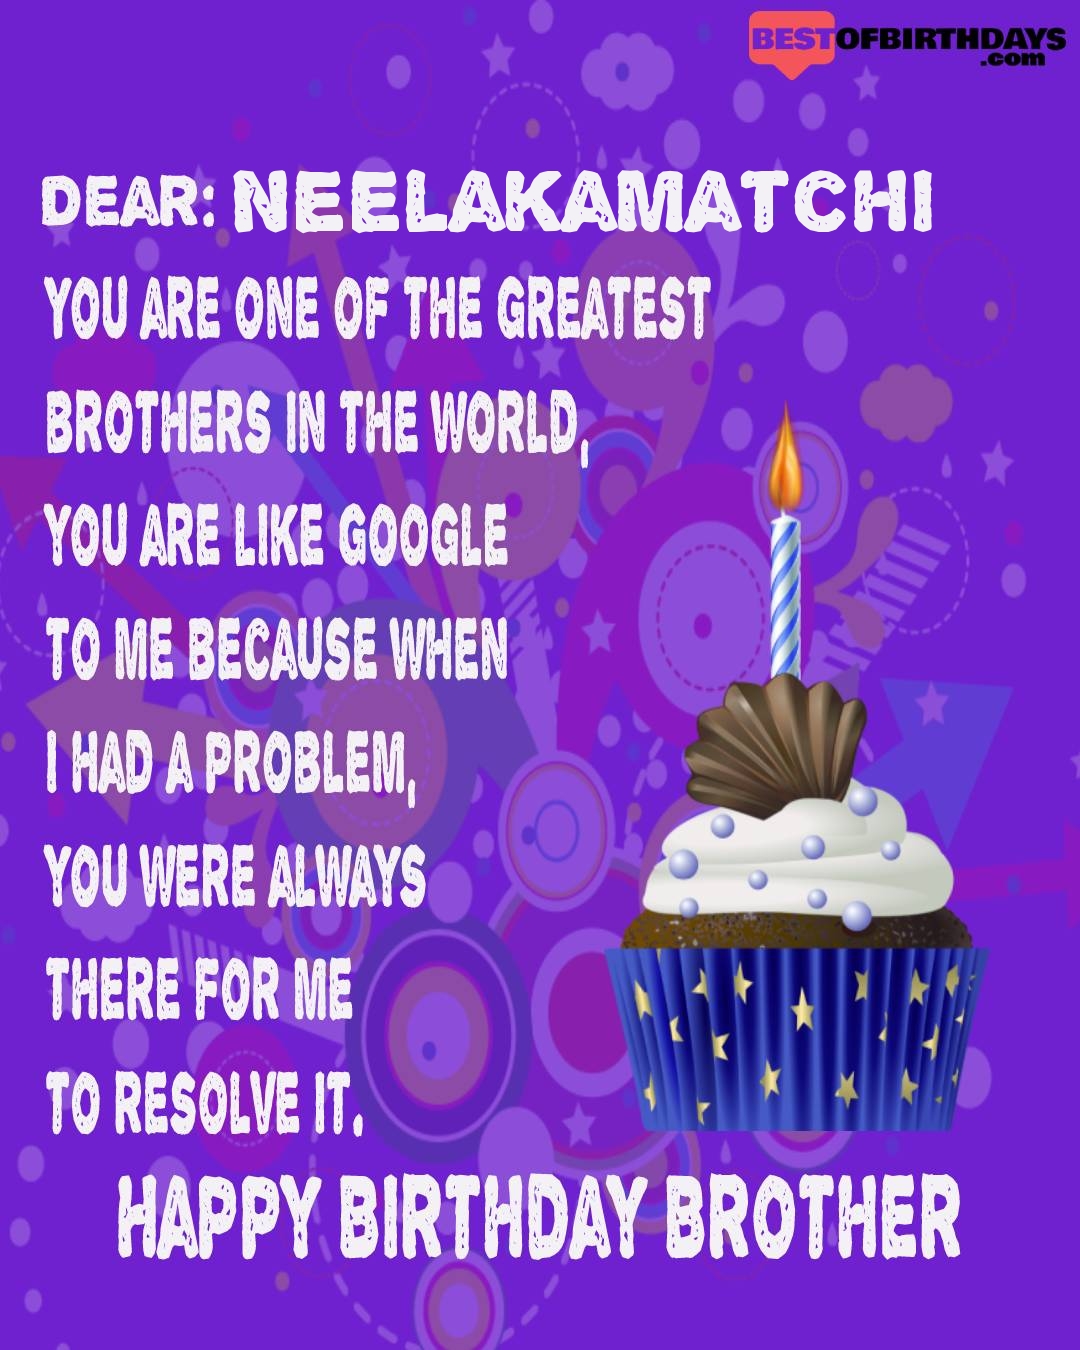 Happy birthday neelakamatchi bhai brother bro